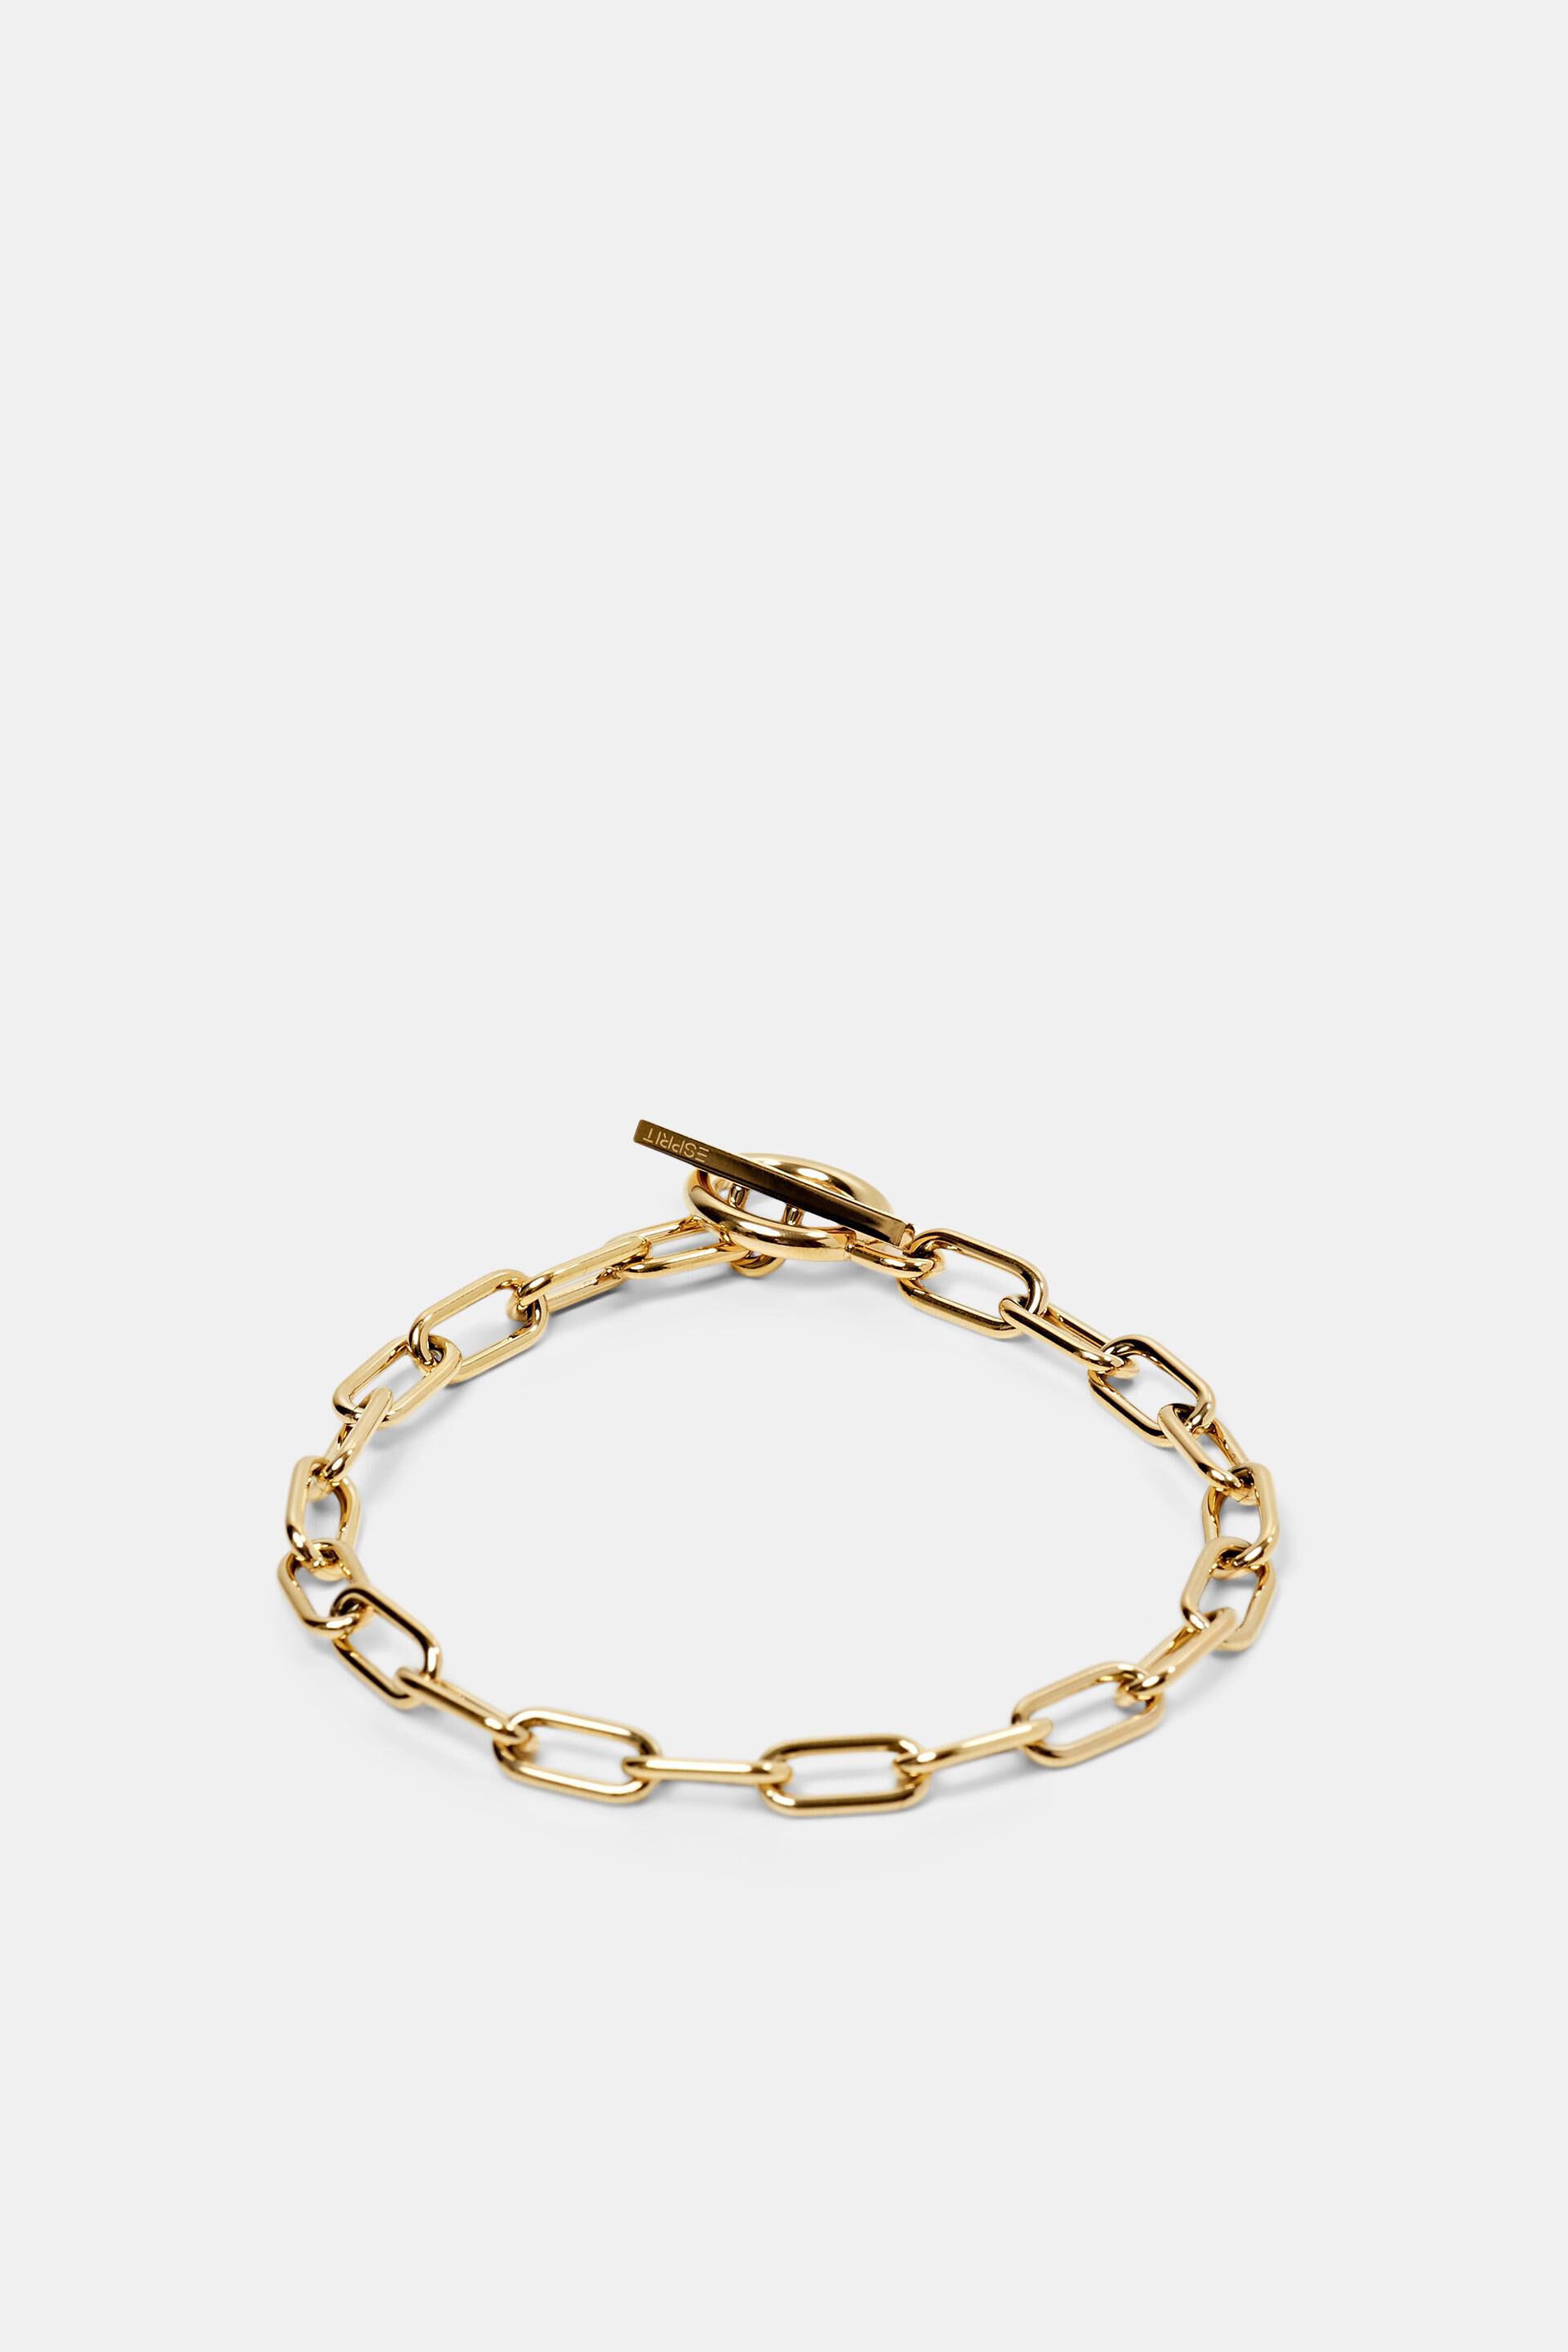 Esprit steel bracelet, stainless Chain